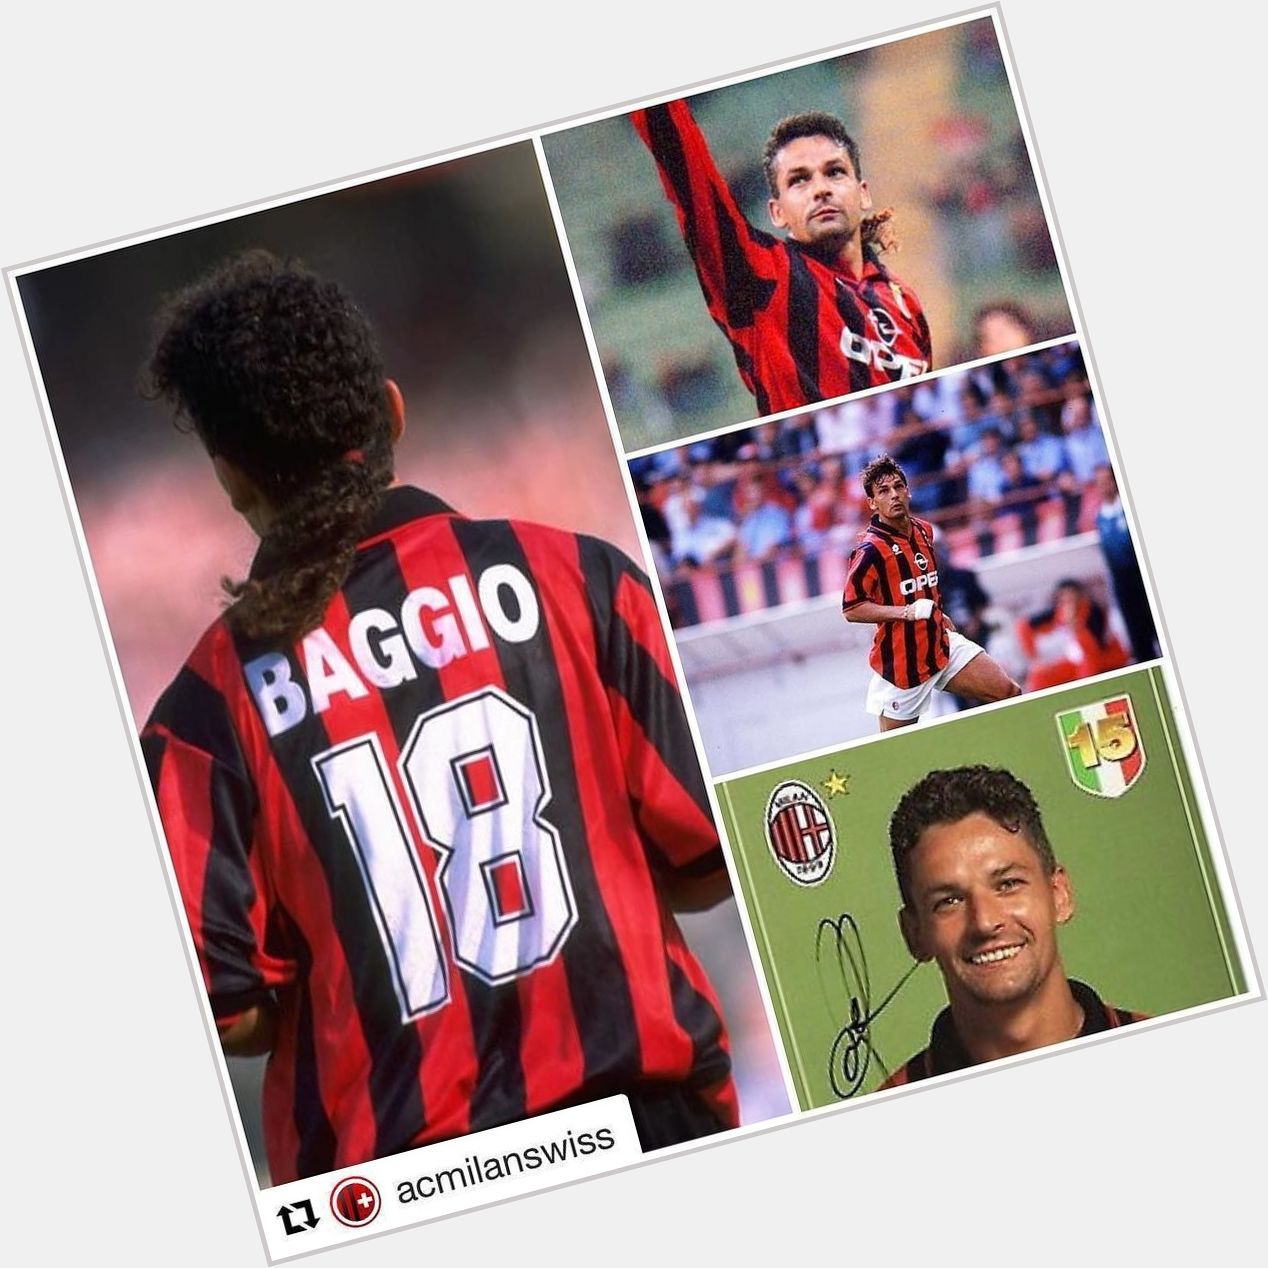      HAPPY BIRTHDAY BAGGIO! Roberto Baggio turns 50 years old today. 